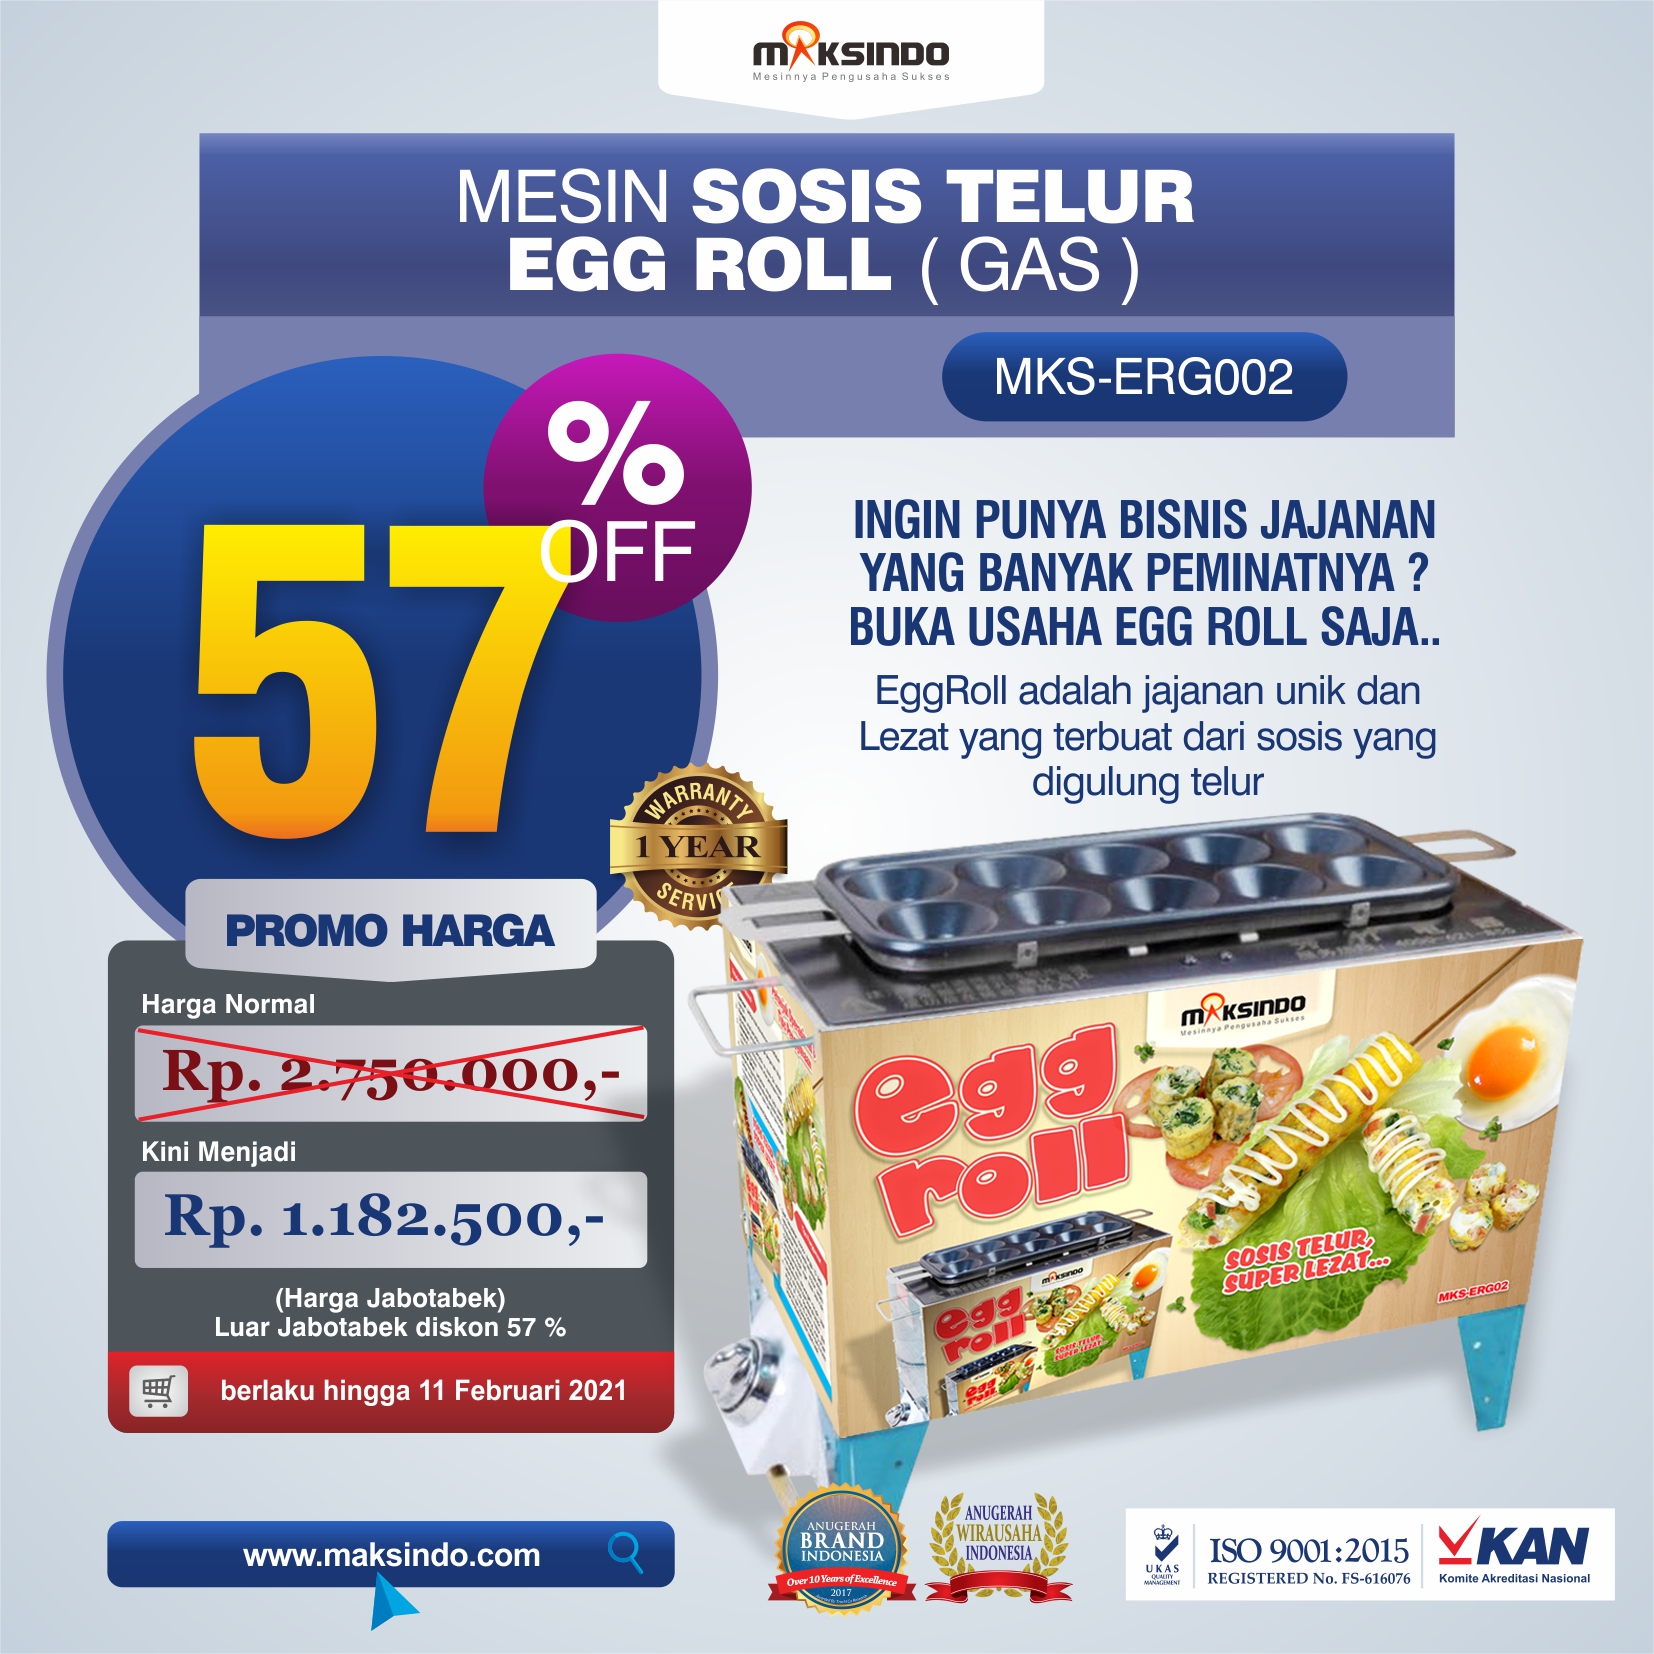 Mesin Pembuat Egg Roll (Gas) MKS-ERG002